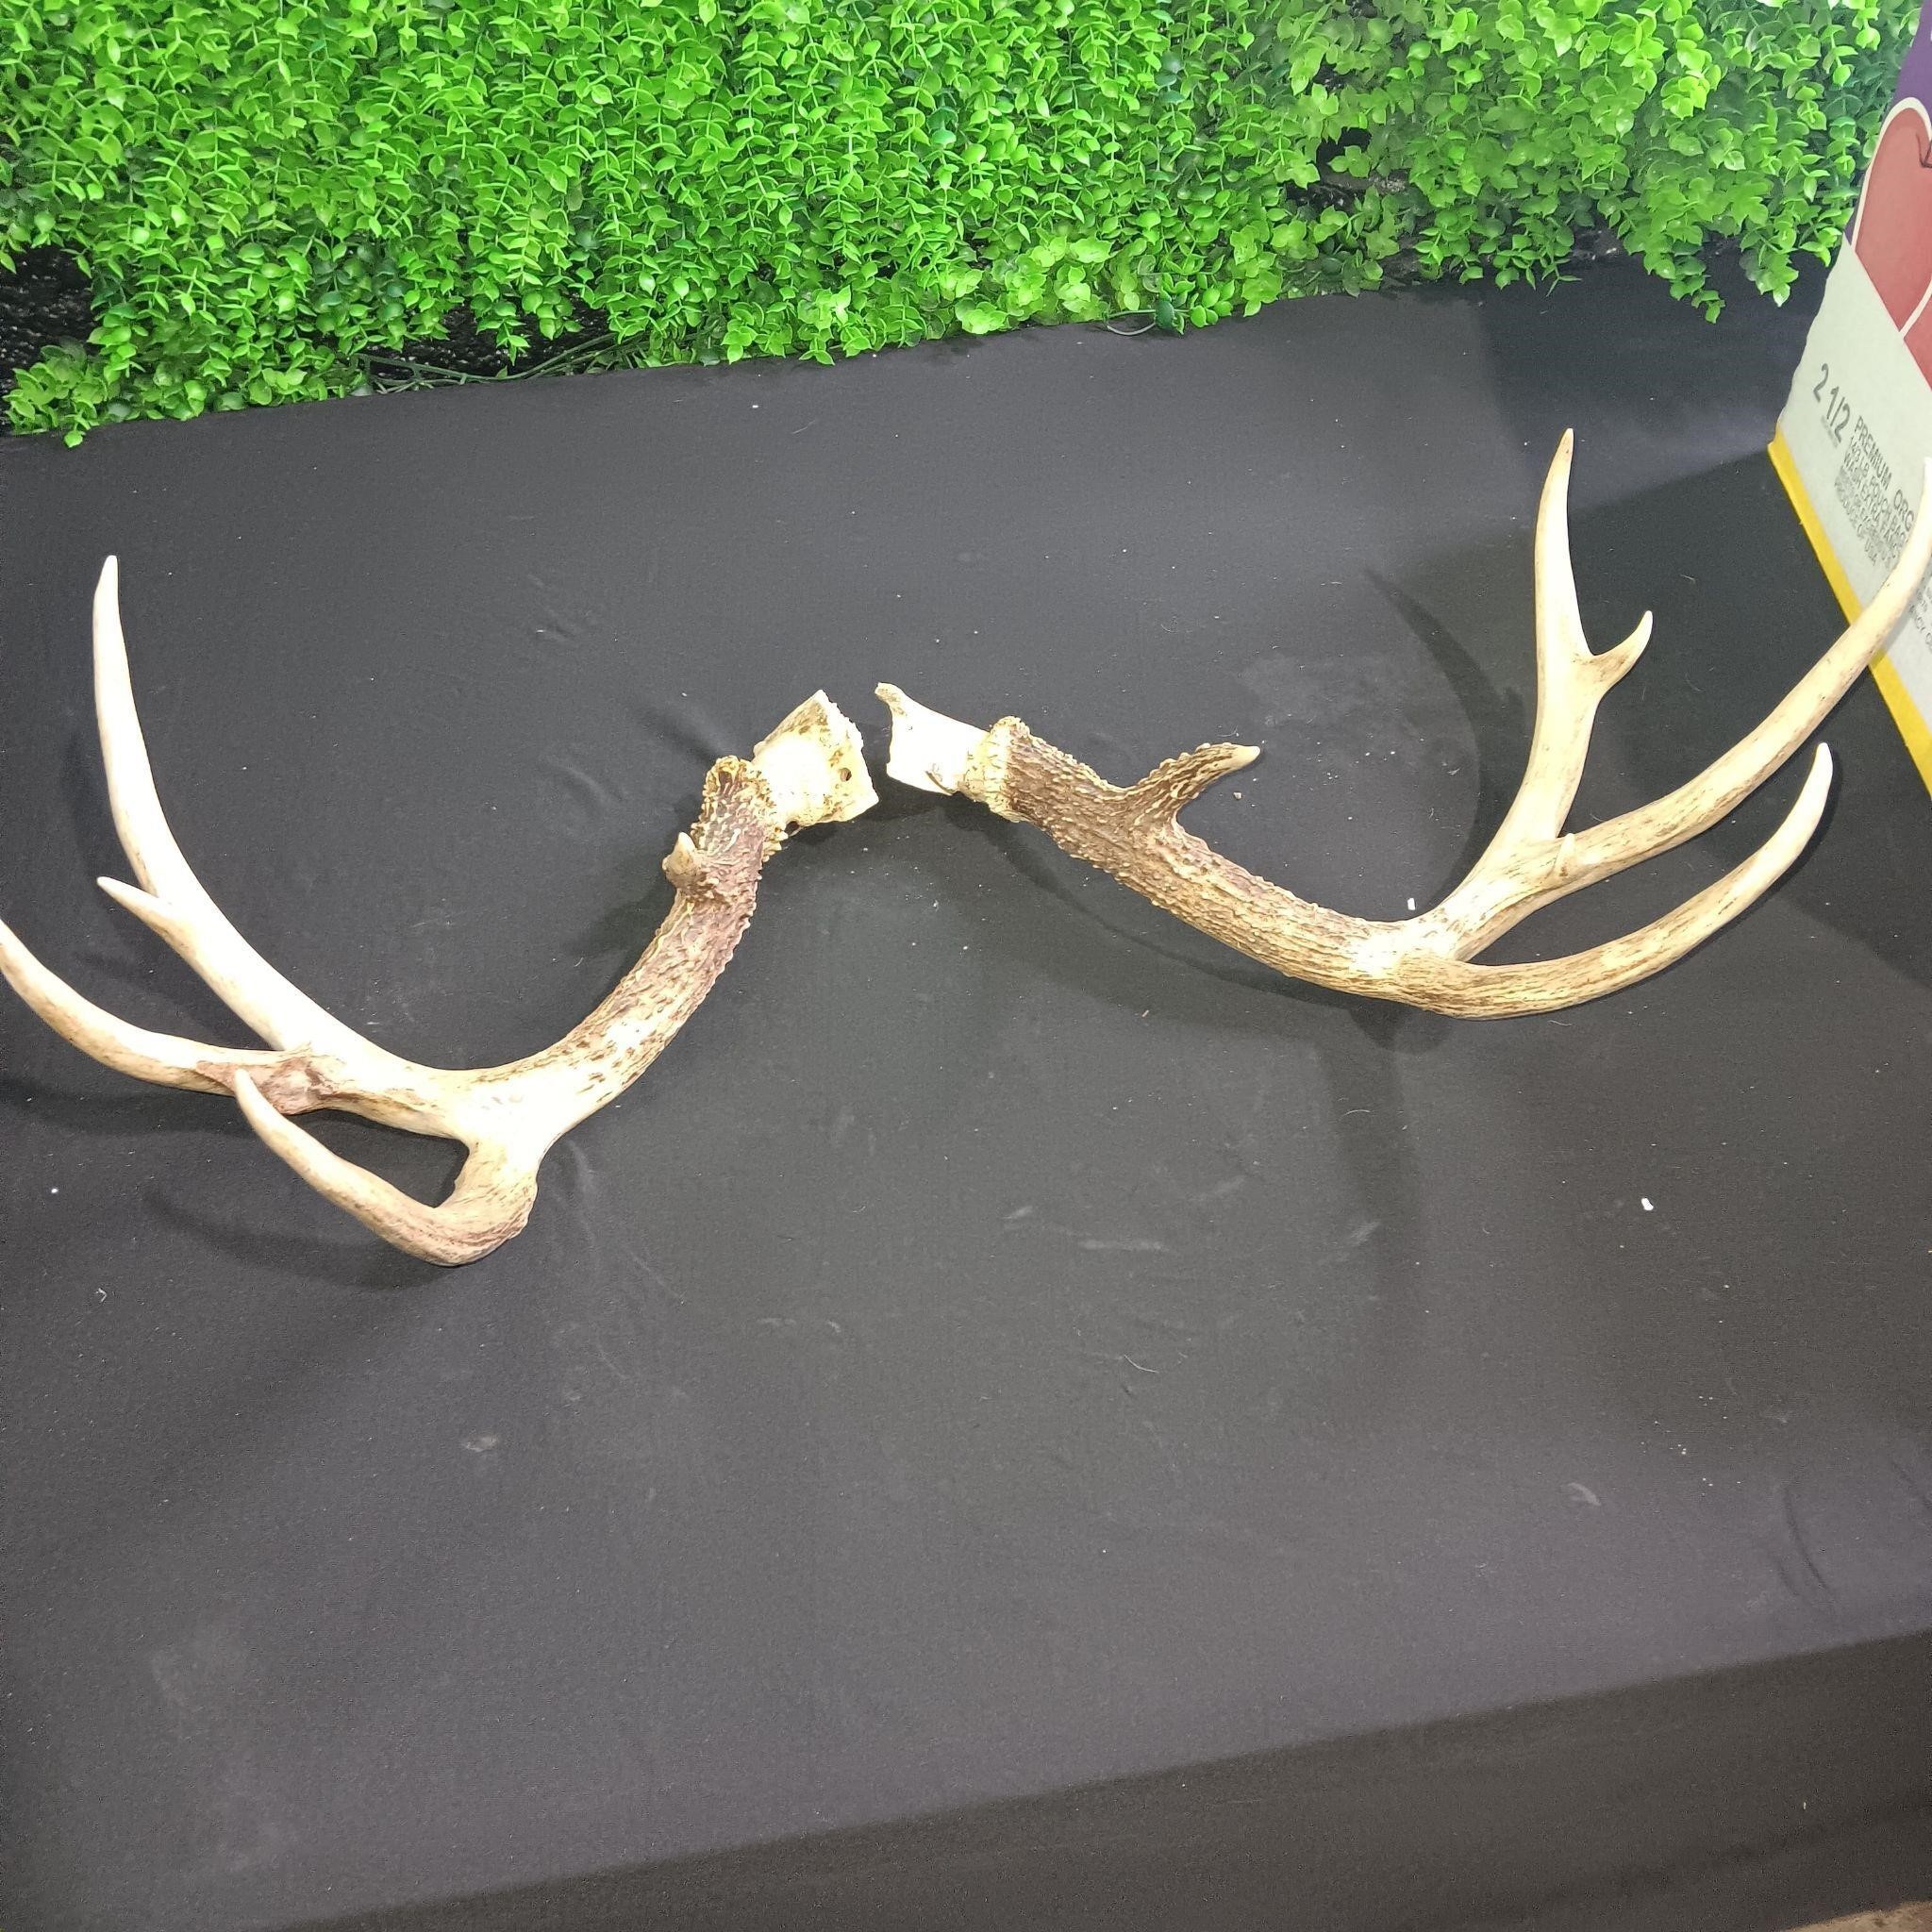 Deer Antler Size 24 x 11